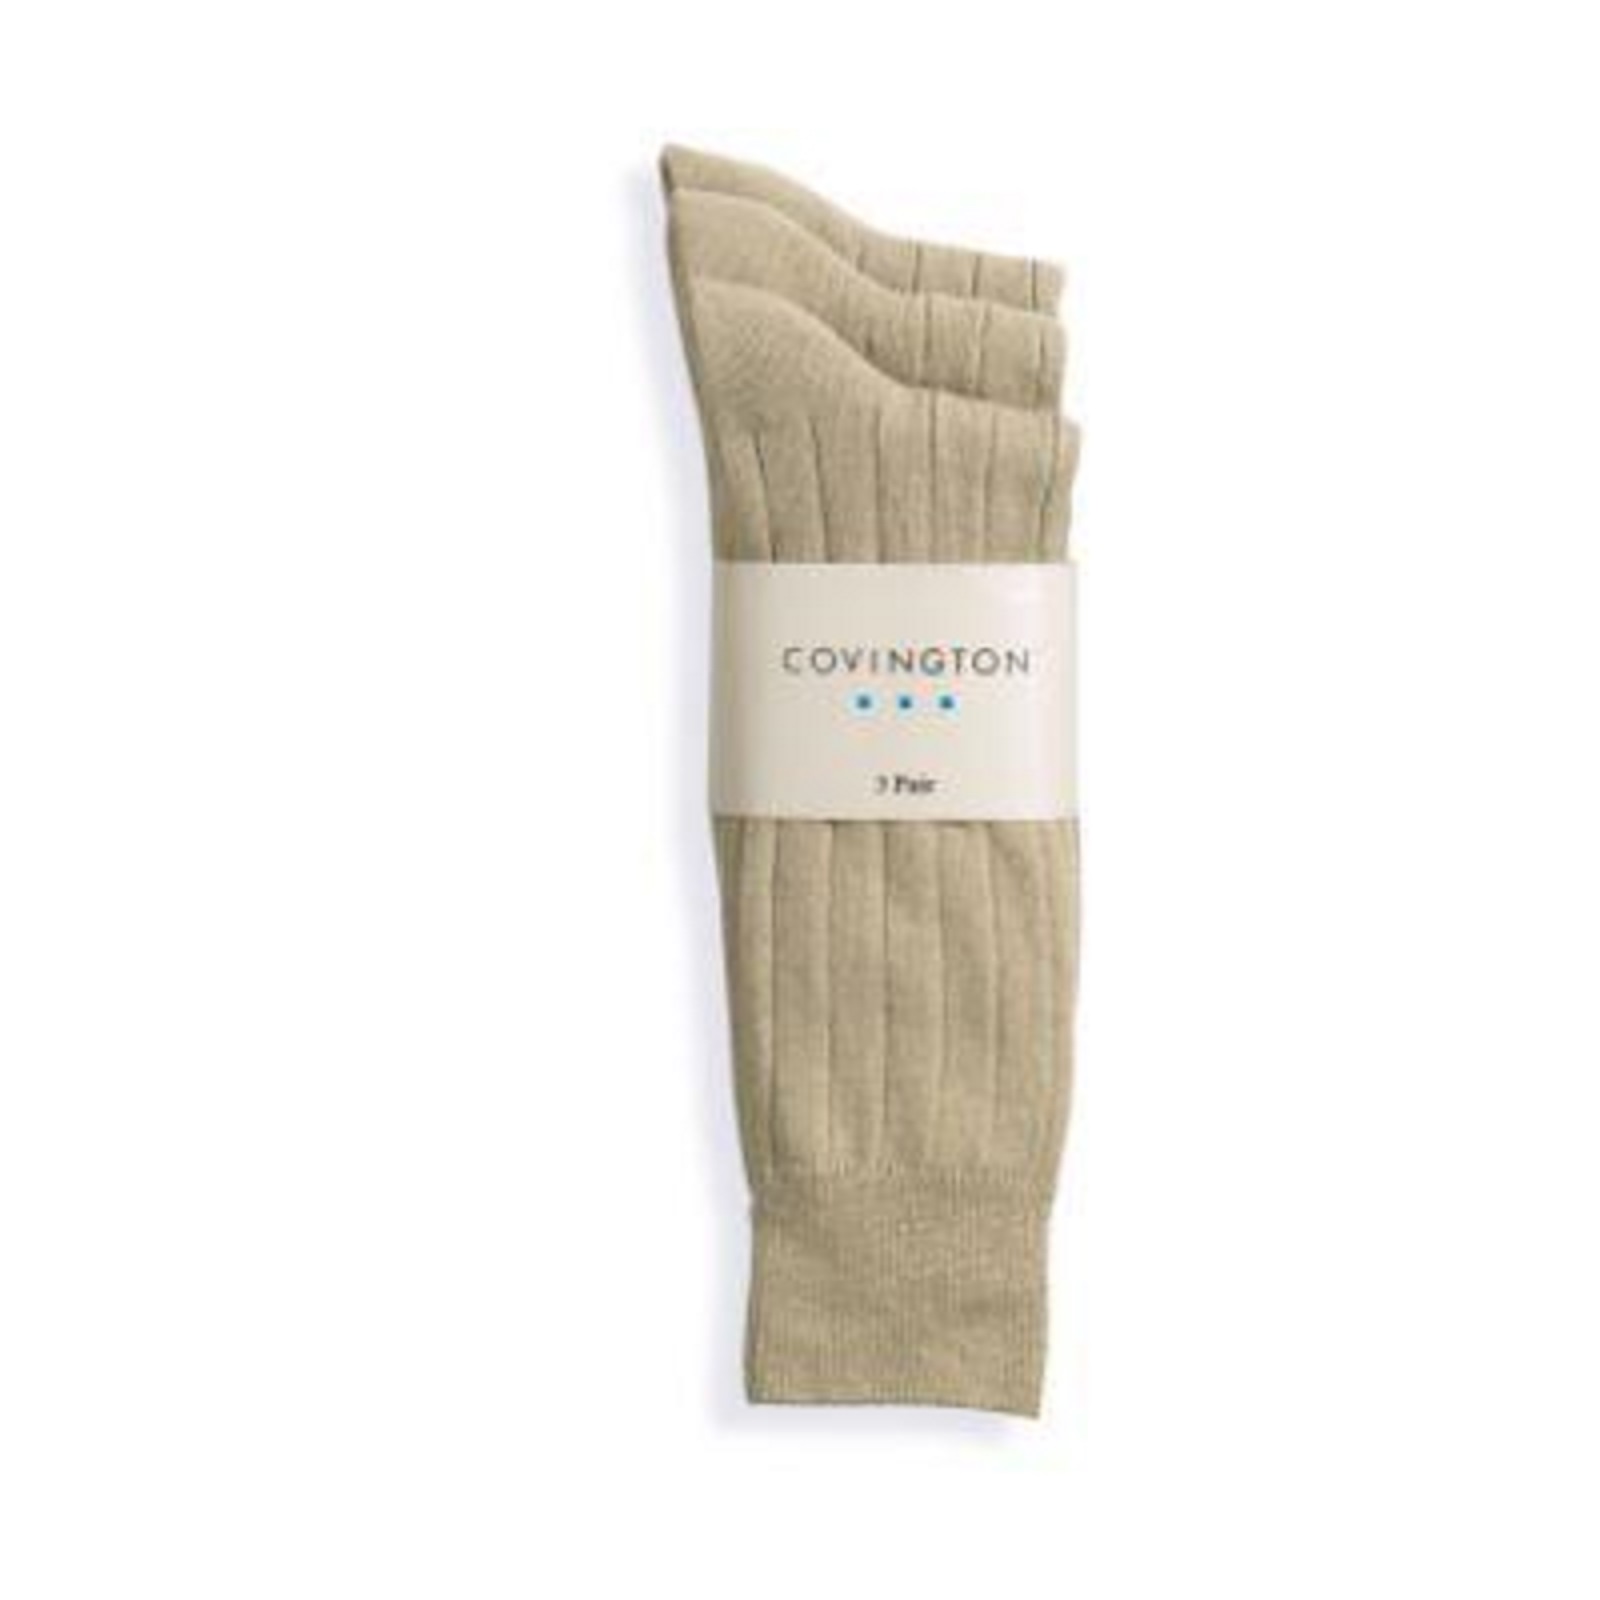 Covington Pima Cotton Rib Socks - 3 Pair Pack